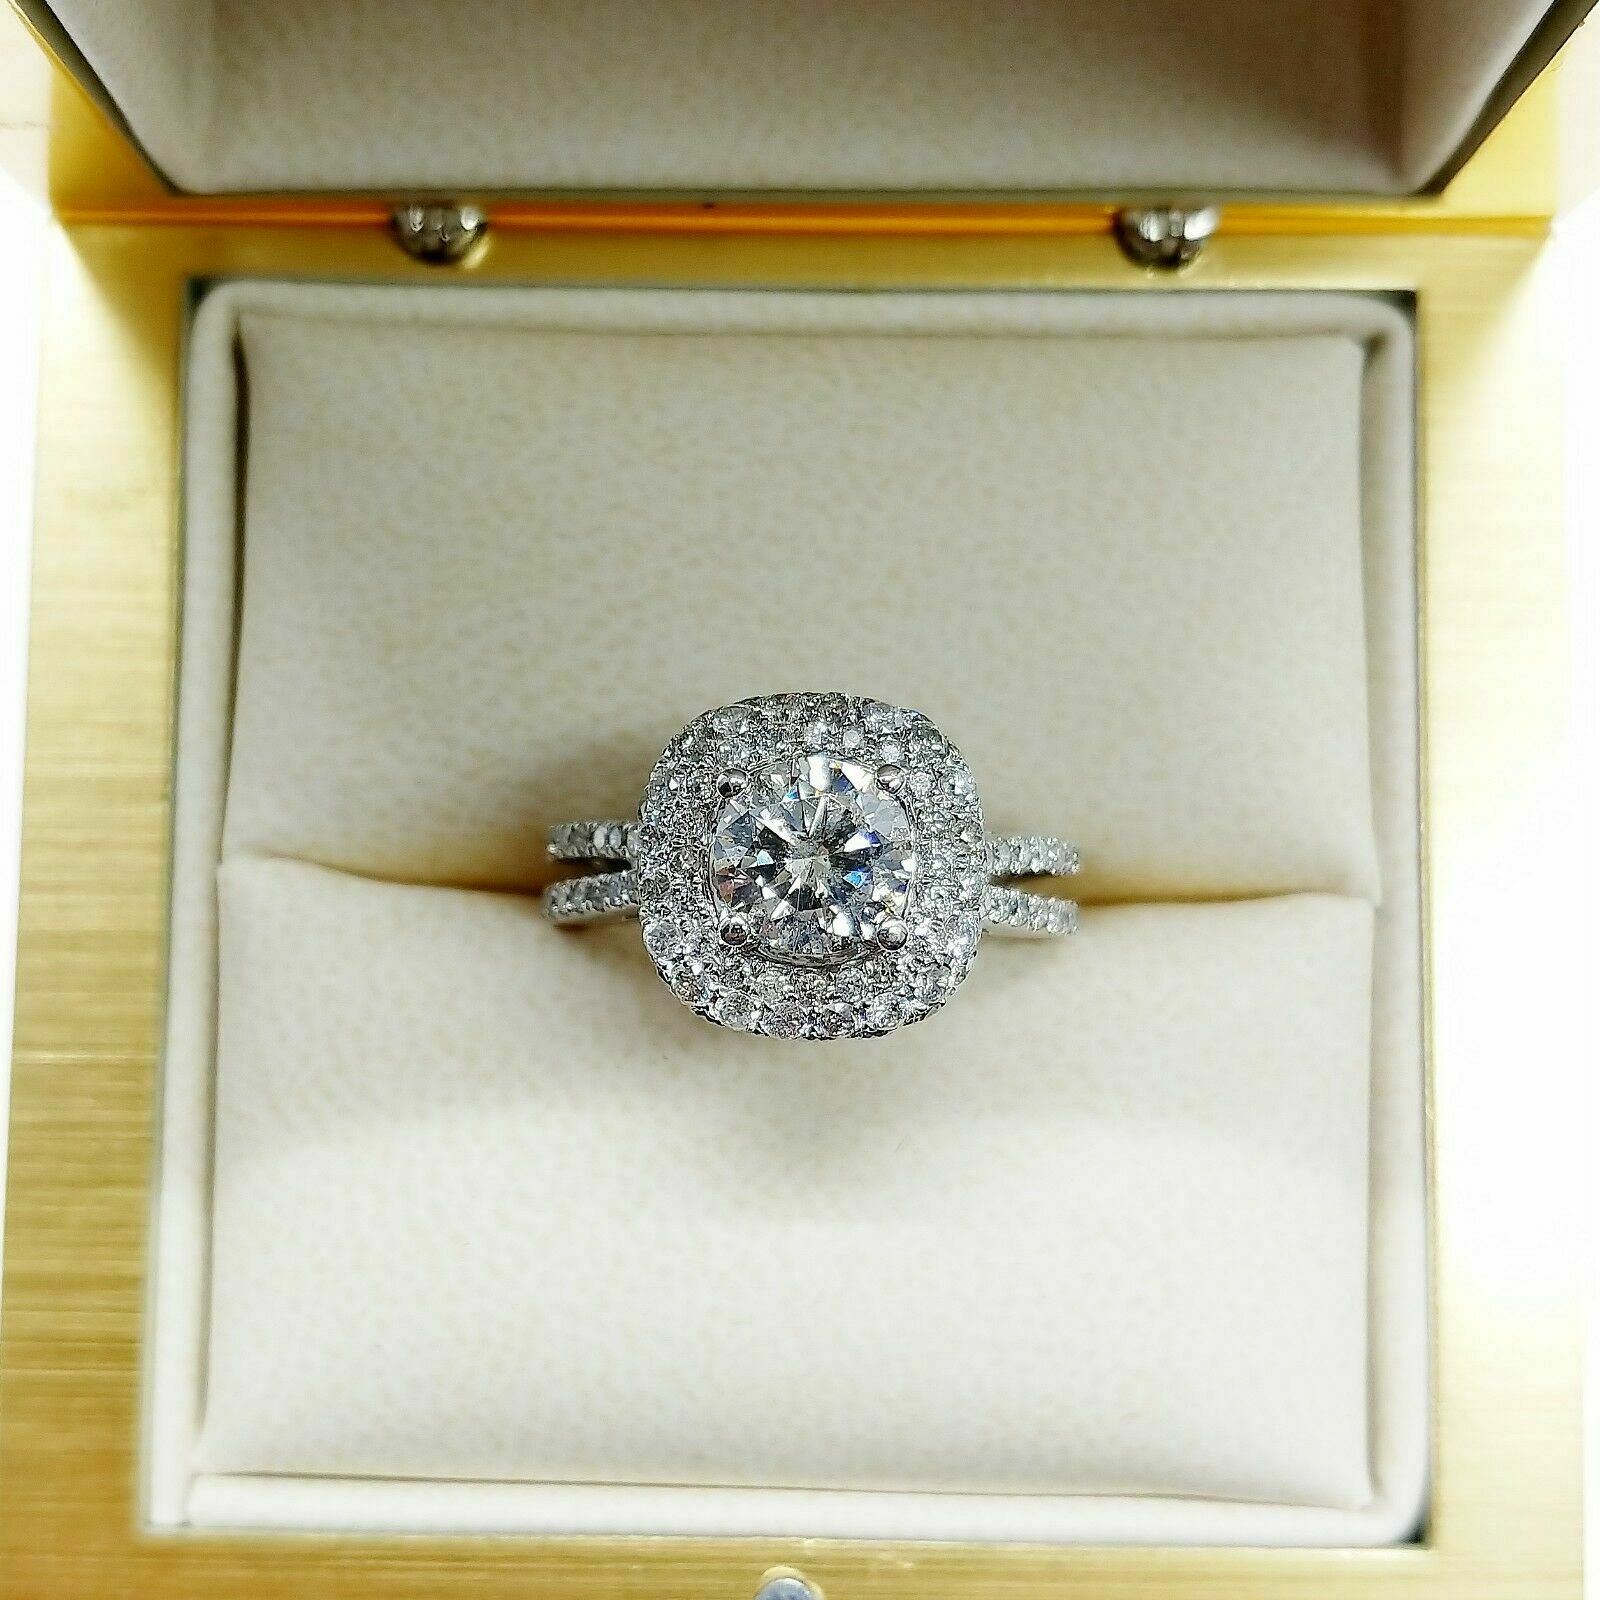 2.07 Carats t.w. Puffed Halo Diamond Engagement Ring Center 0.96 Carat 14K White